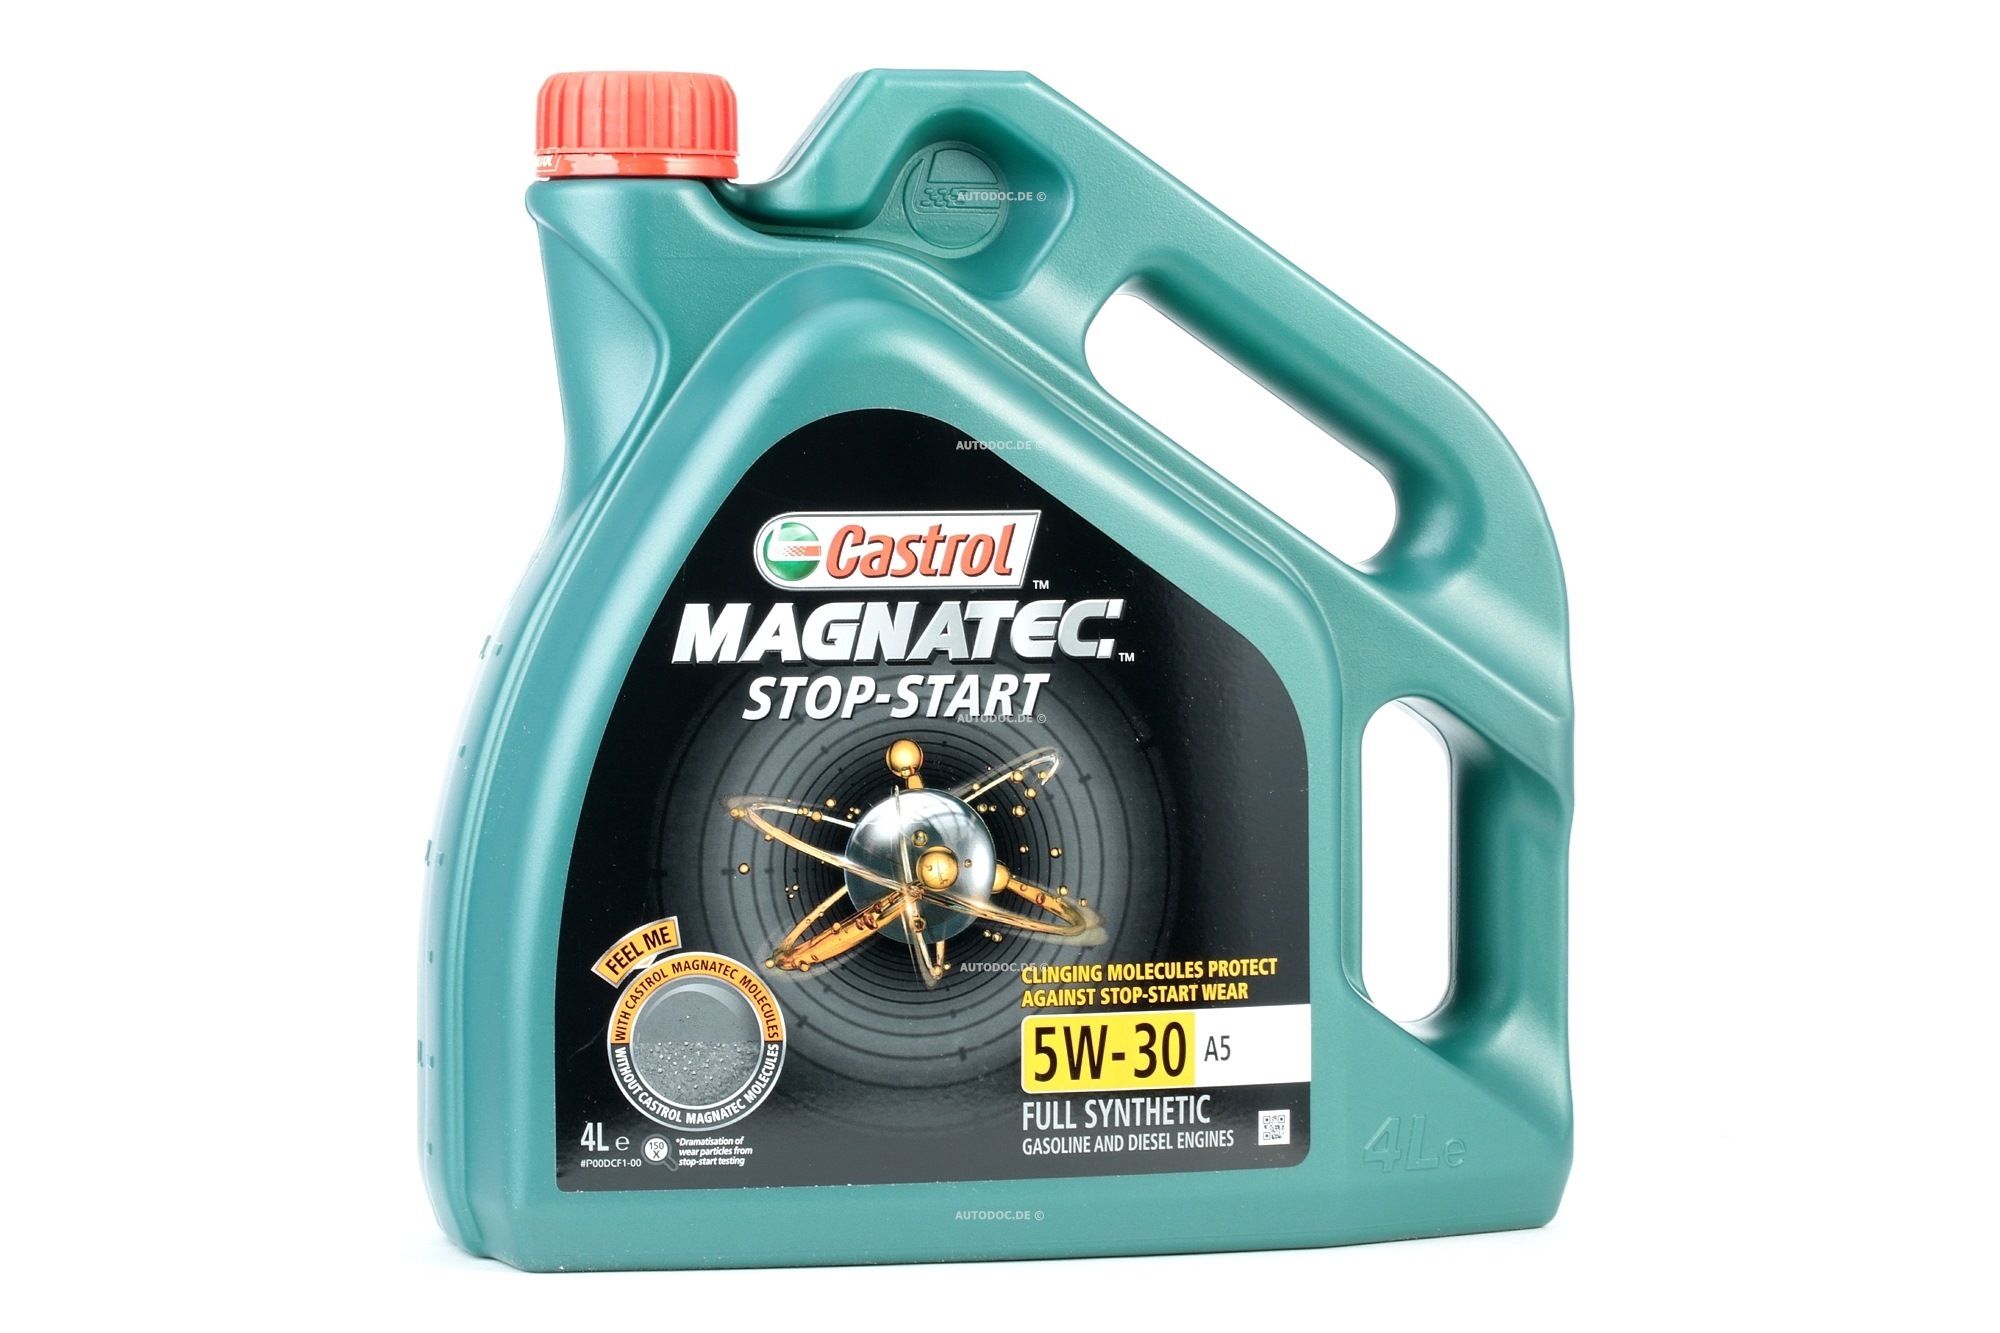 CASTROL Magnatec, Stop-Start A5 5W-30, 4l, Vollsynthetiköl Motorenöl 159B9A online kaufen